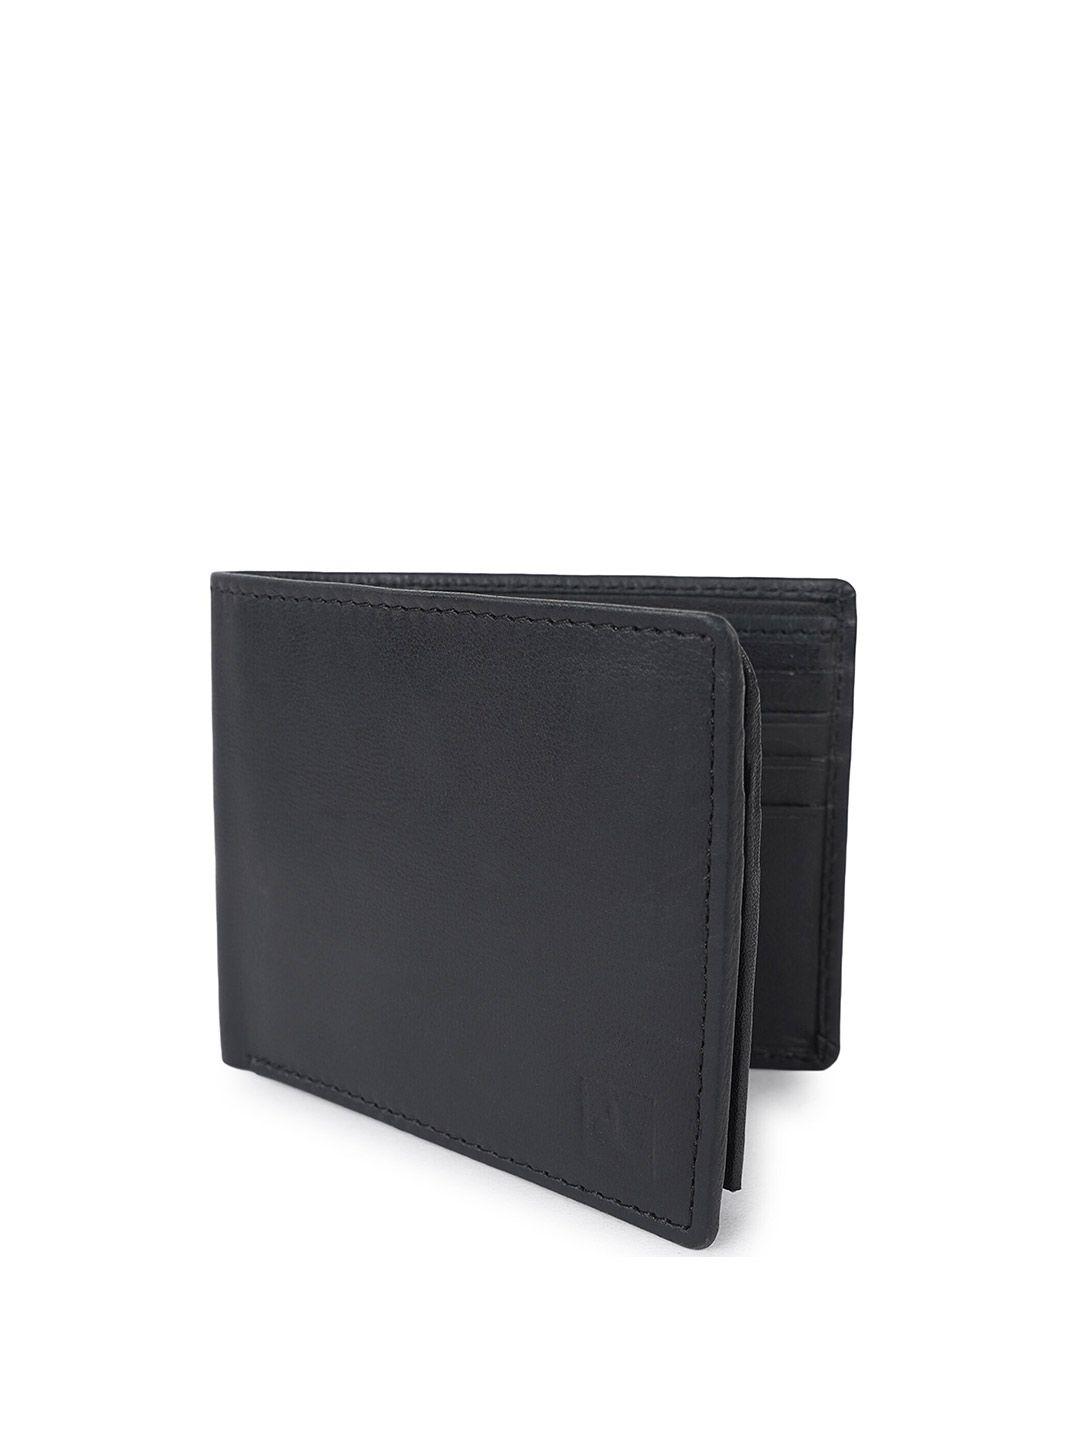 cimoni leather two fold wallet